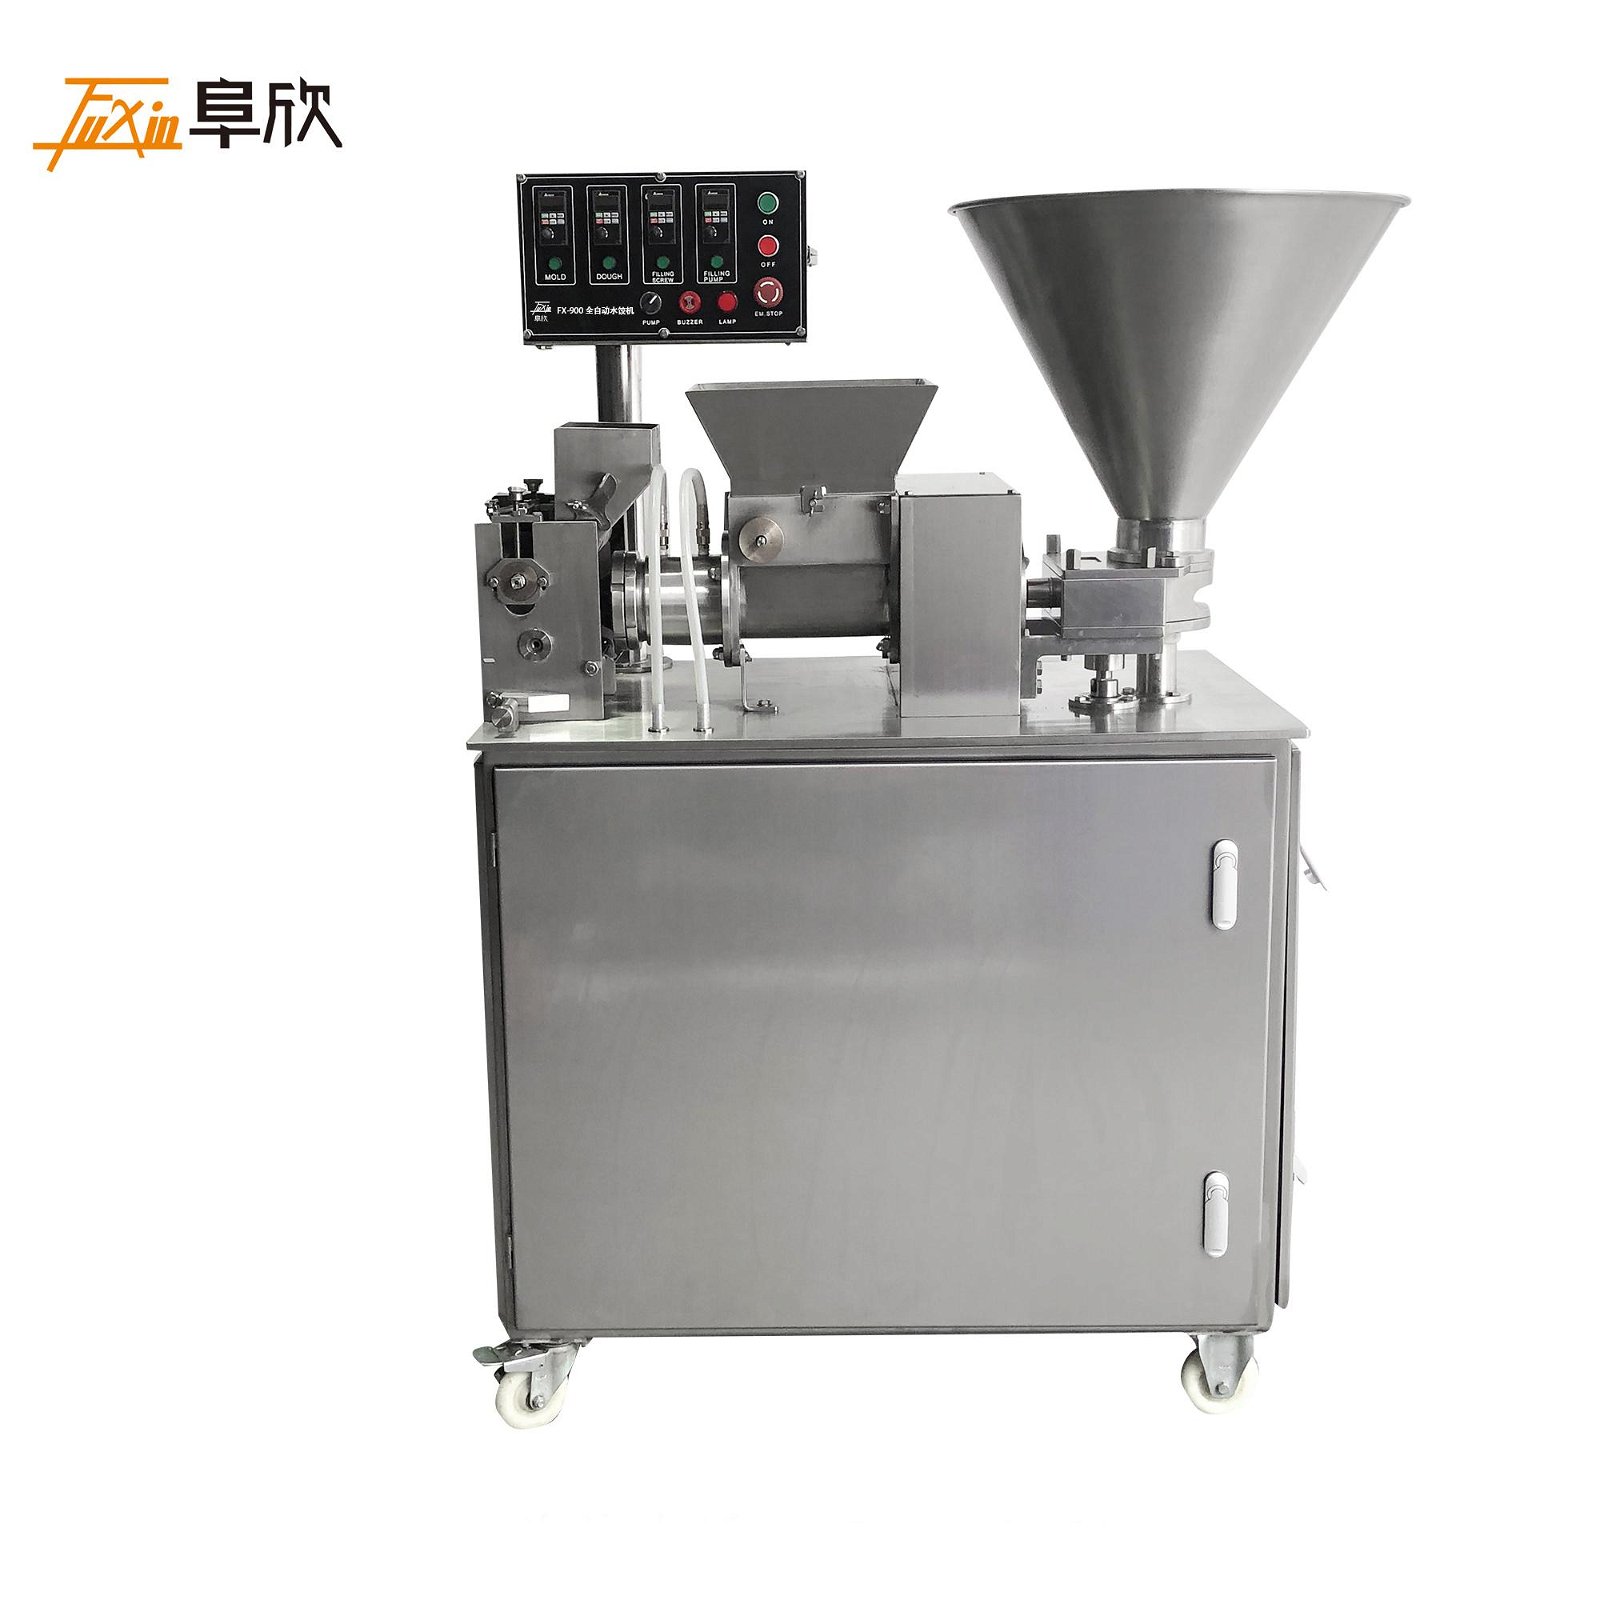 FX-900 automatic dumpling machine